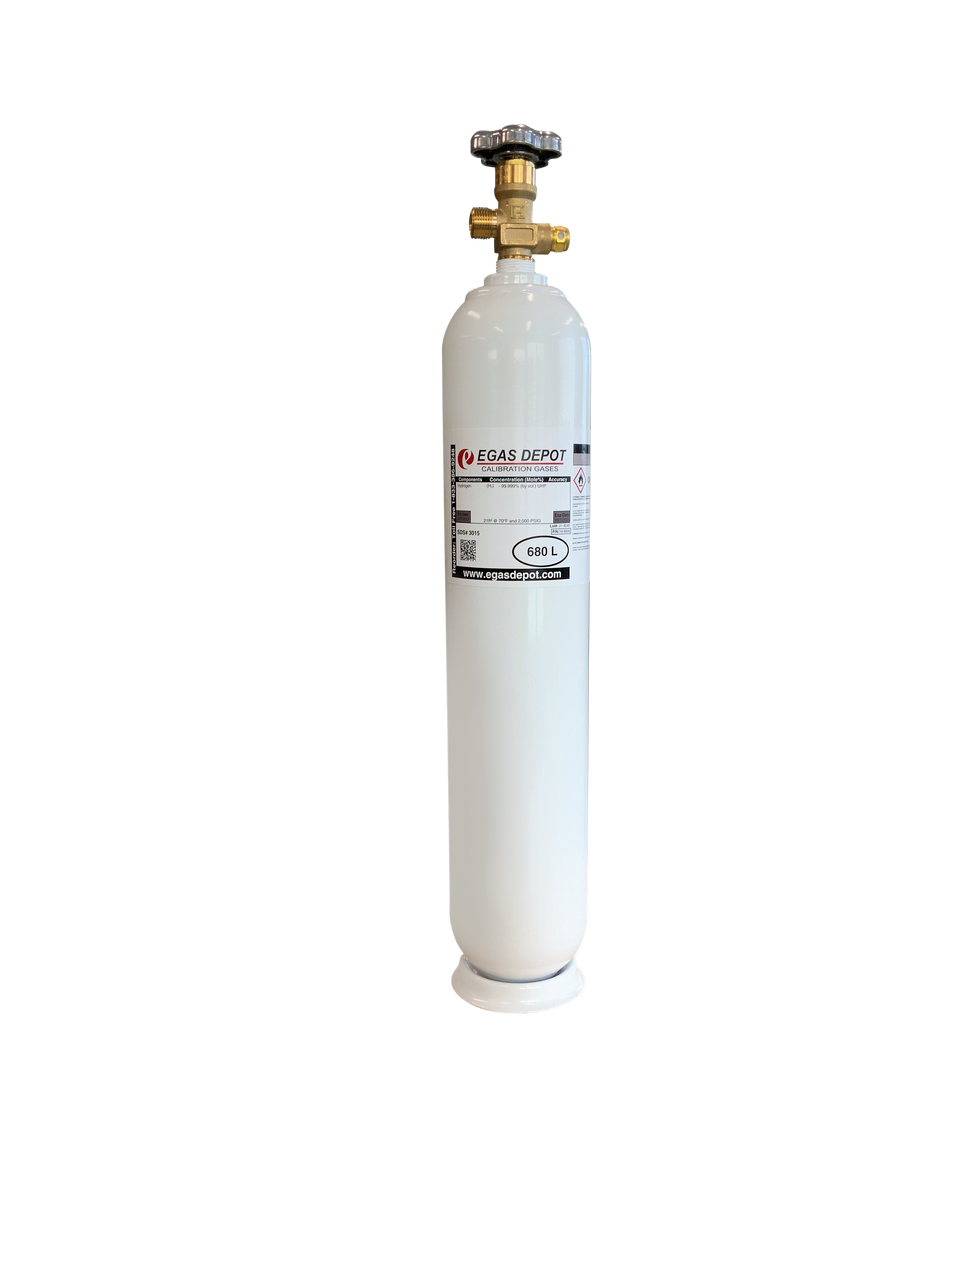 680 Liter - O2 5.1%/ Nitrogen